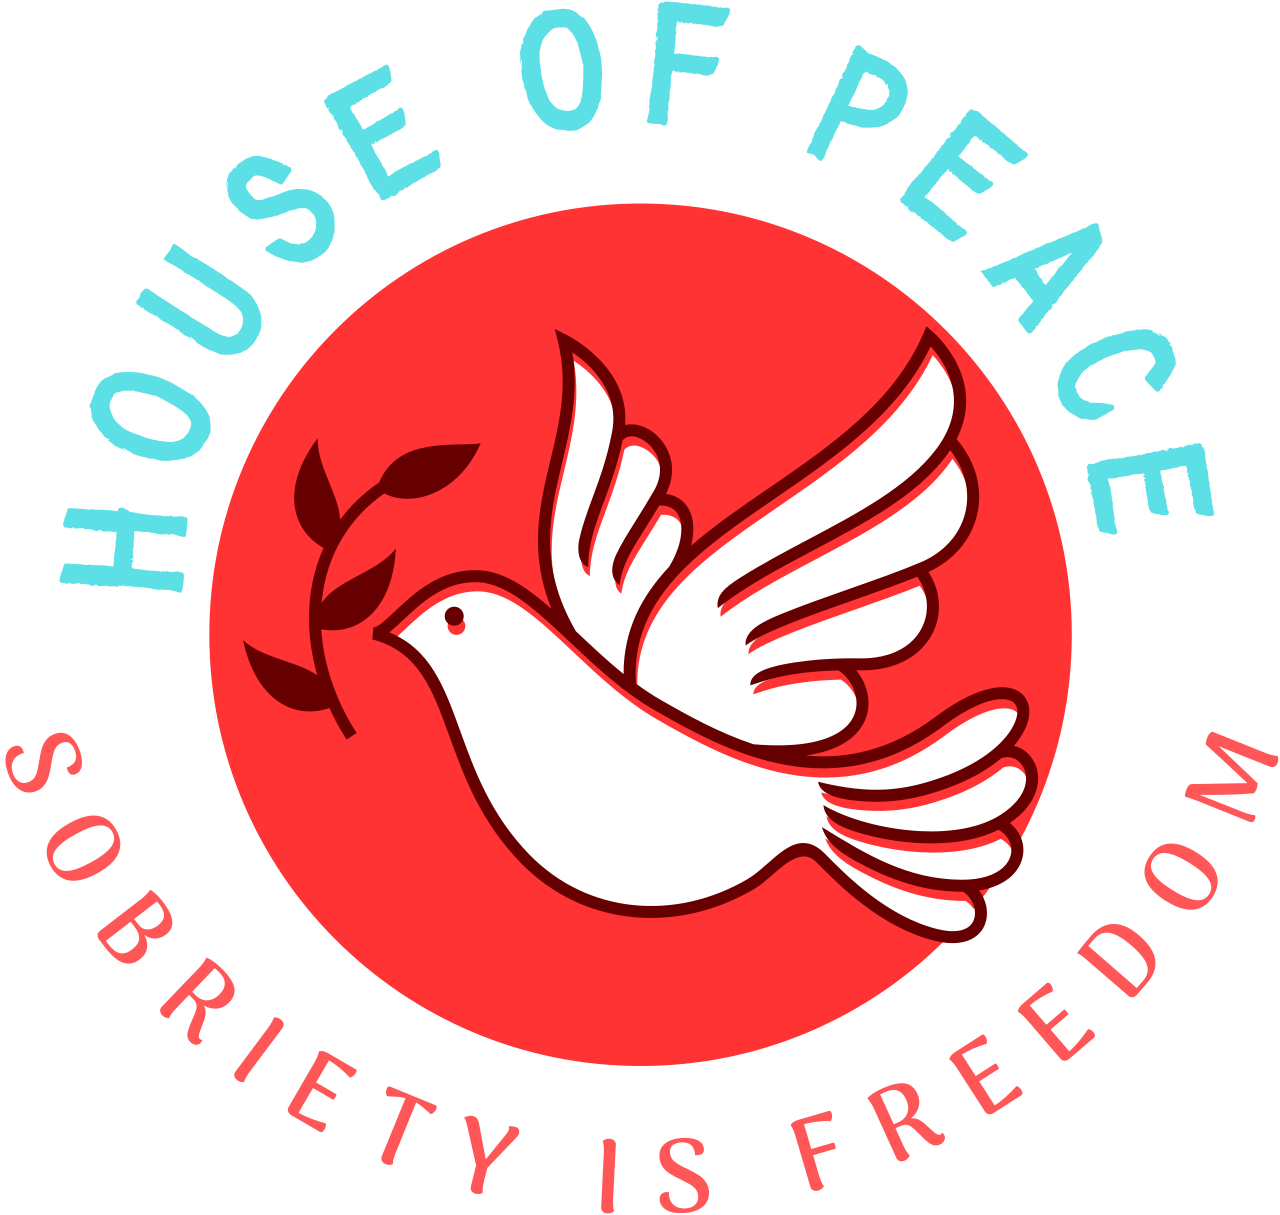 House Of Peace 's logo